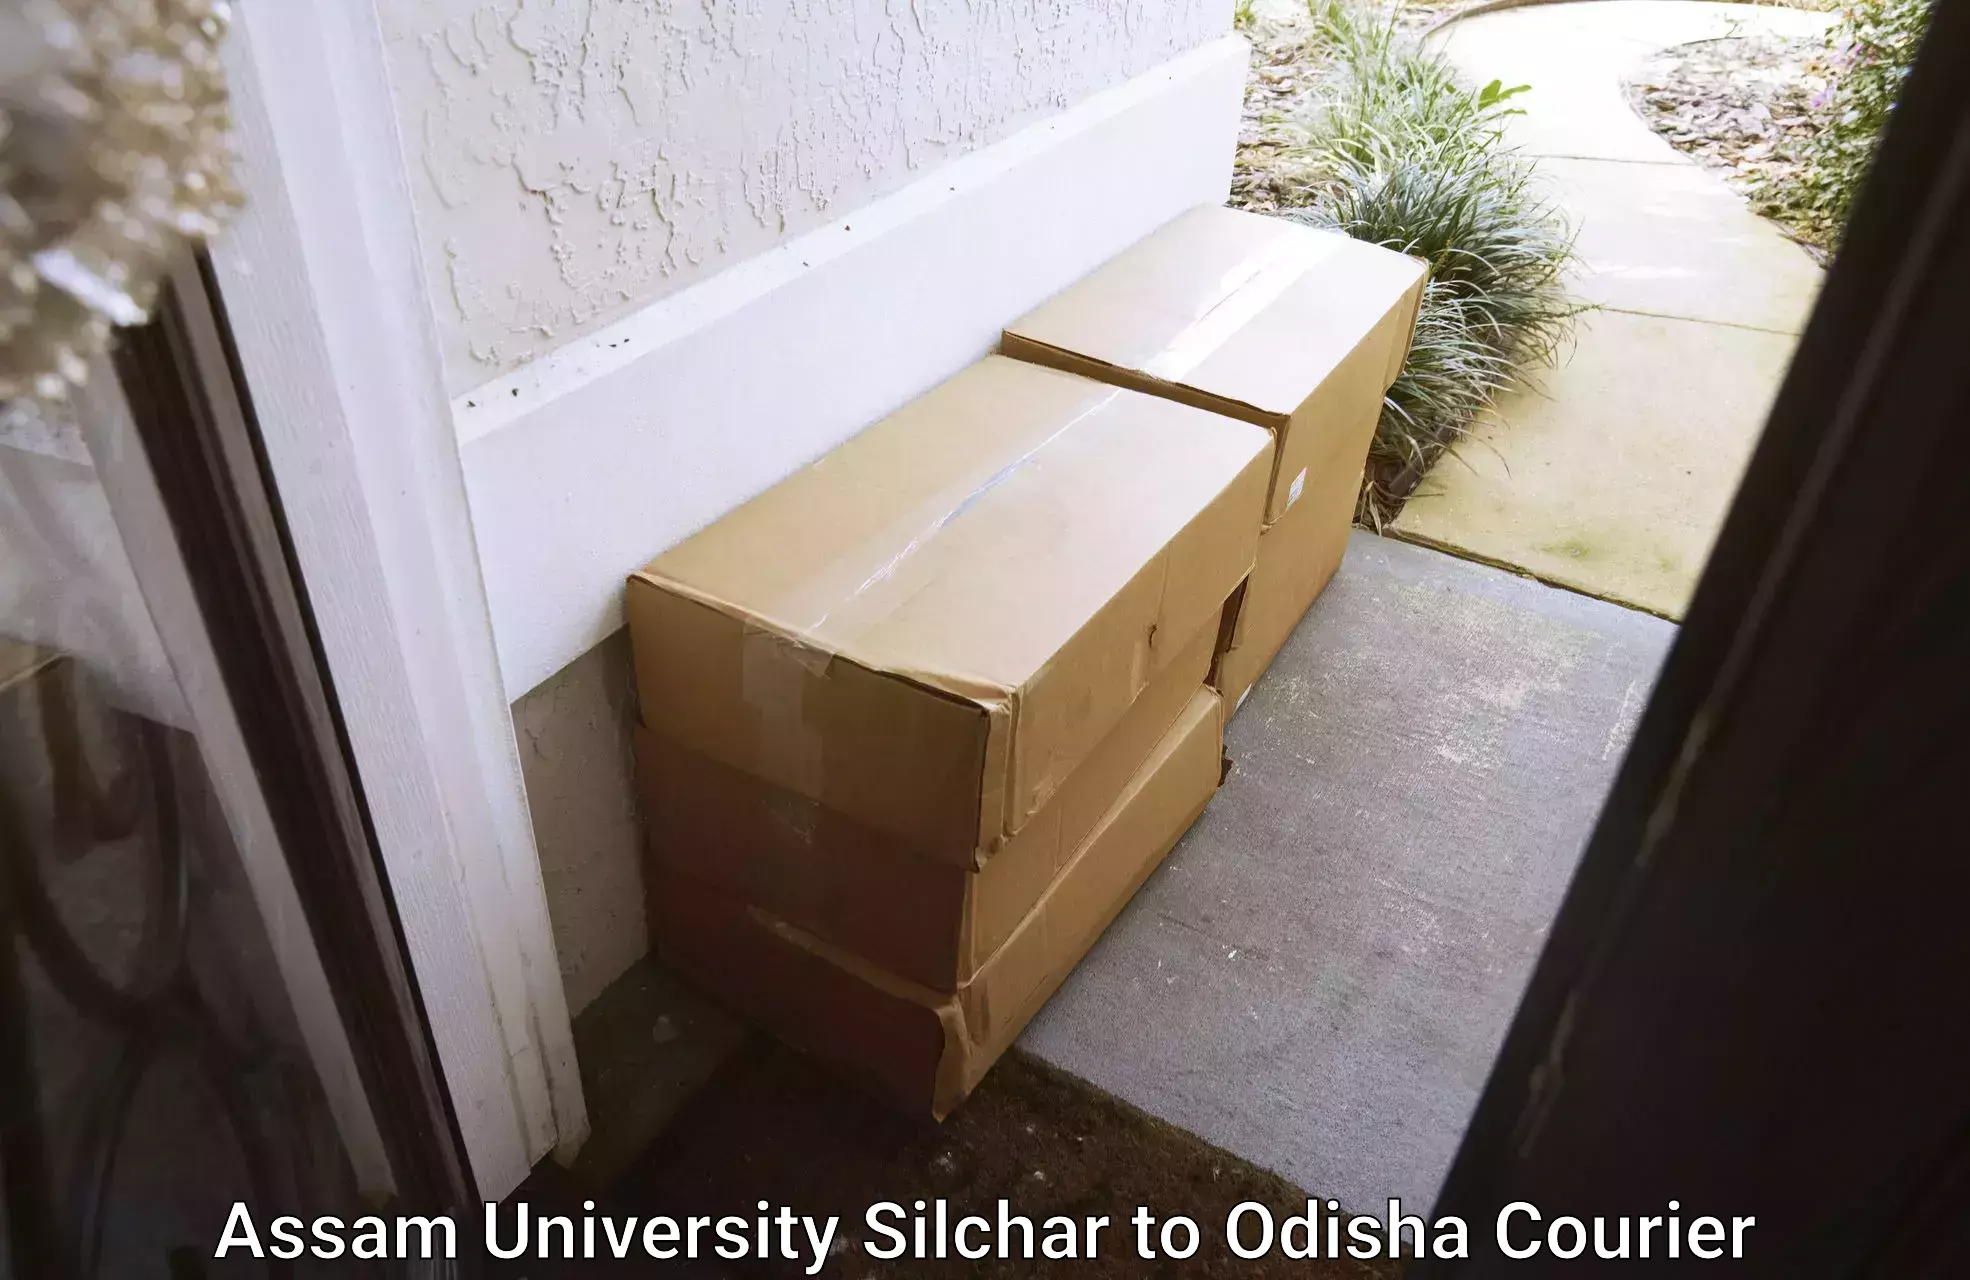 Courier service comparison Assam University Silchar to Odisha